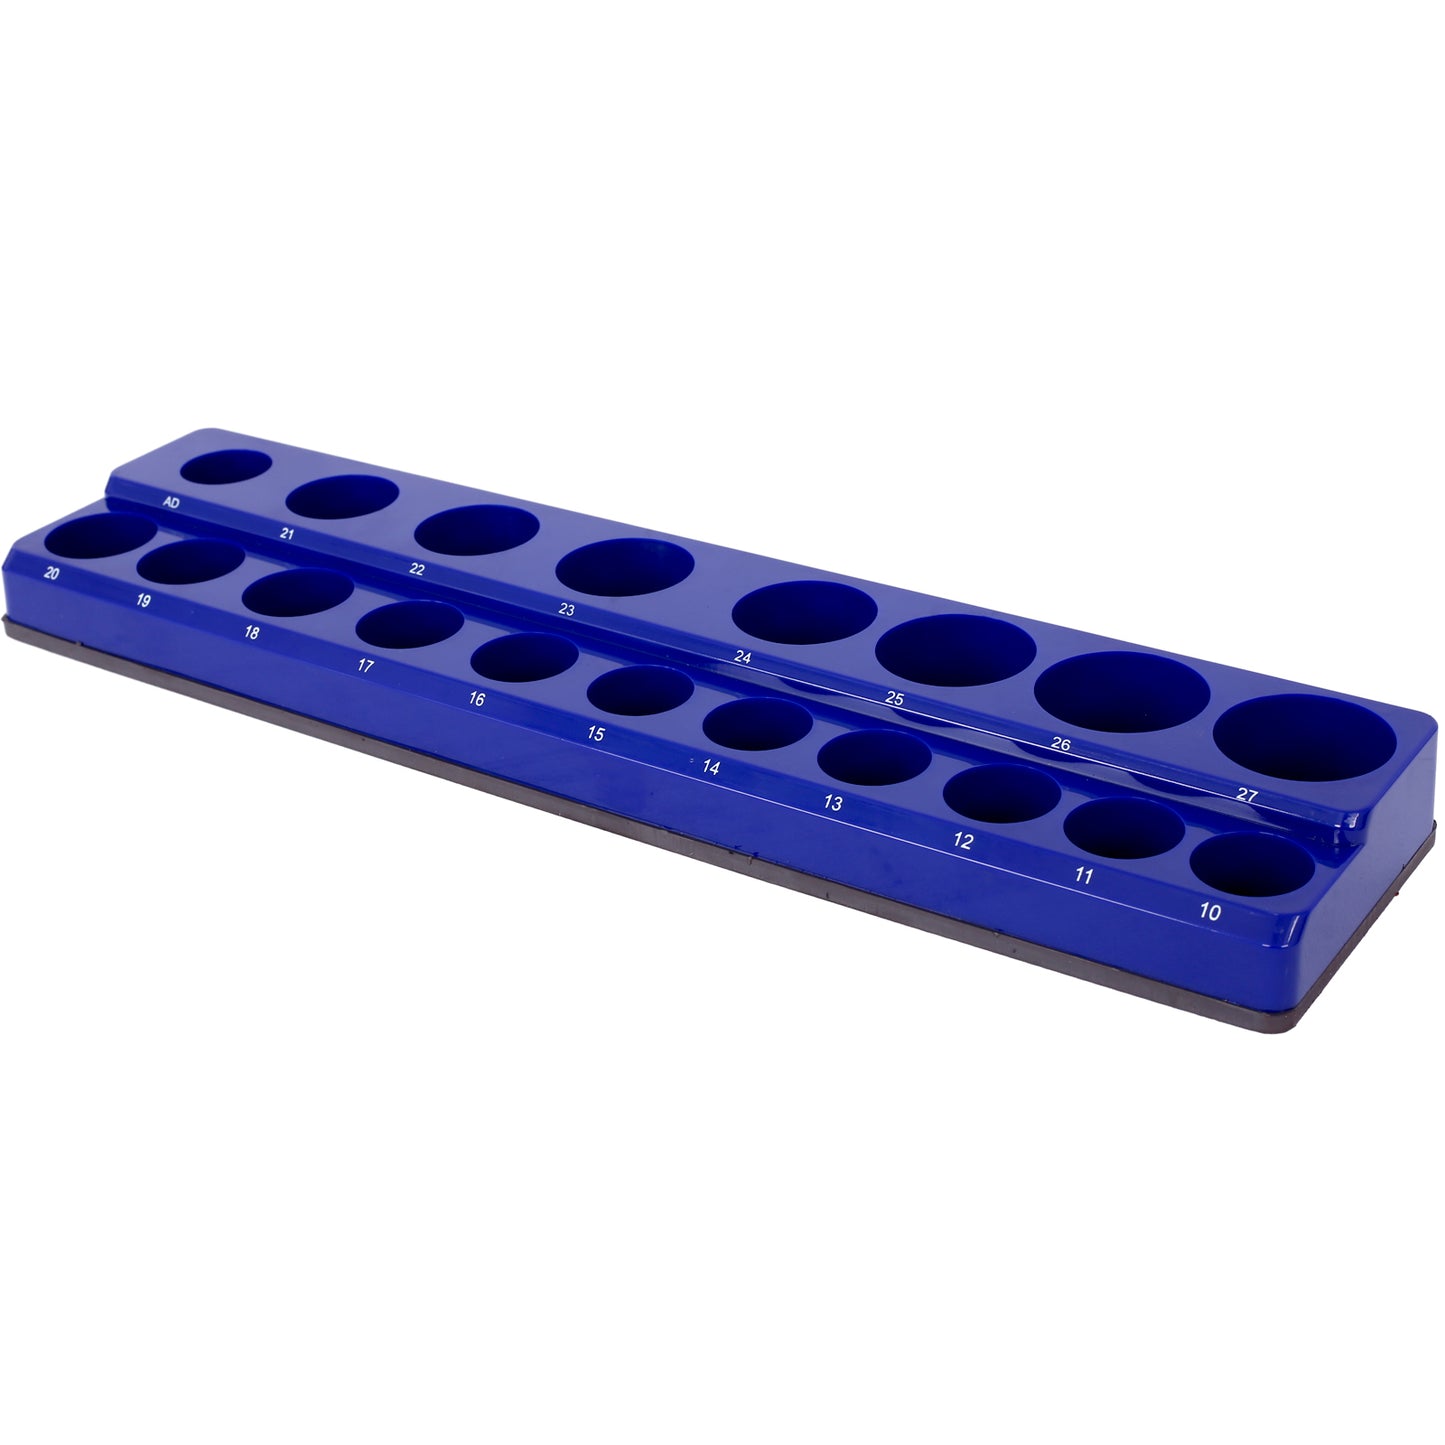 3 Piece metric Magnetic Socket Organizers, Socket Organizers for Toolboxes, Socket Organizer, Magnetic Socket Holder, Black Tool Box Organizer.3set,blue,Metric